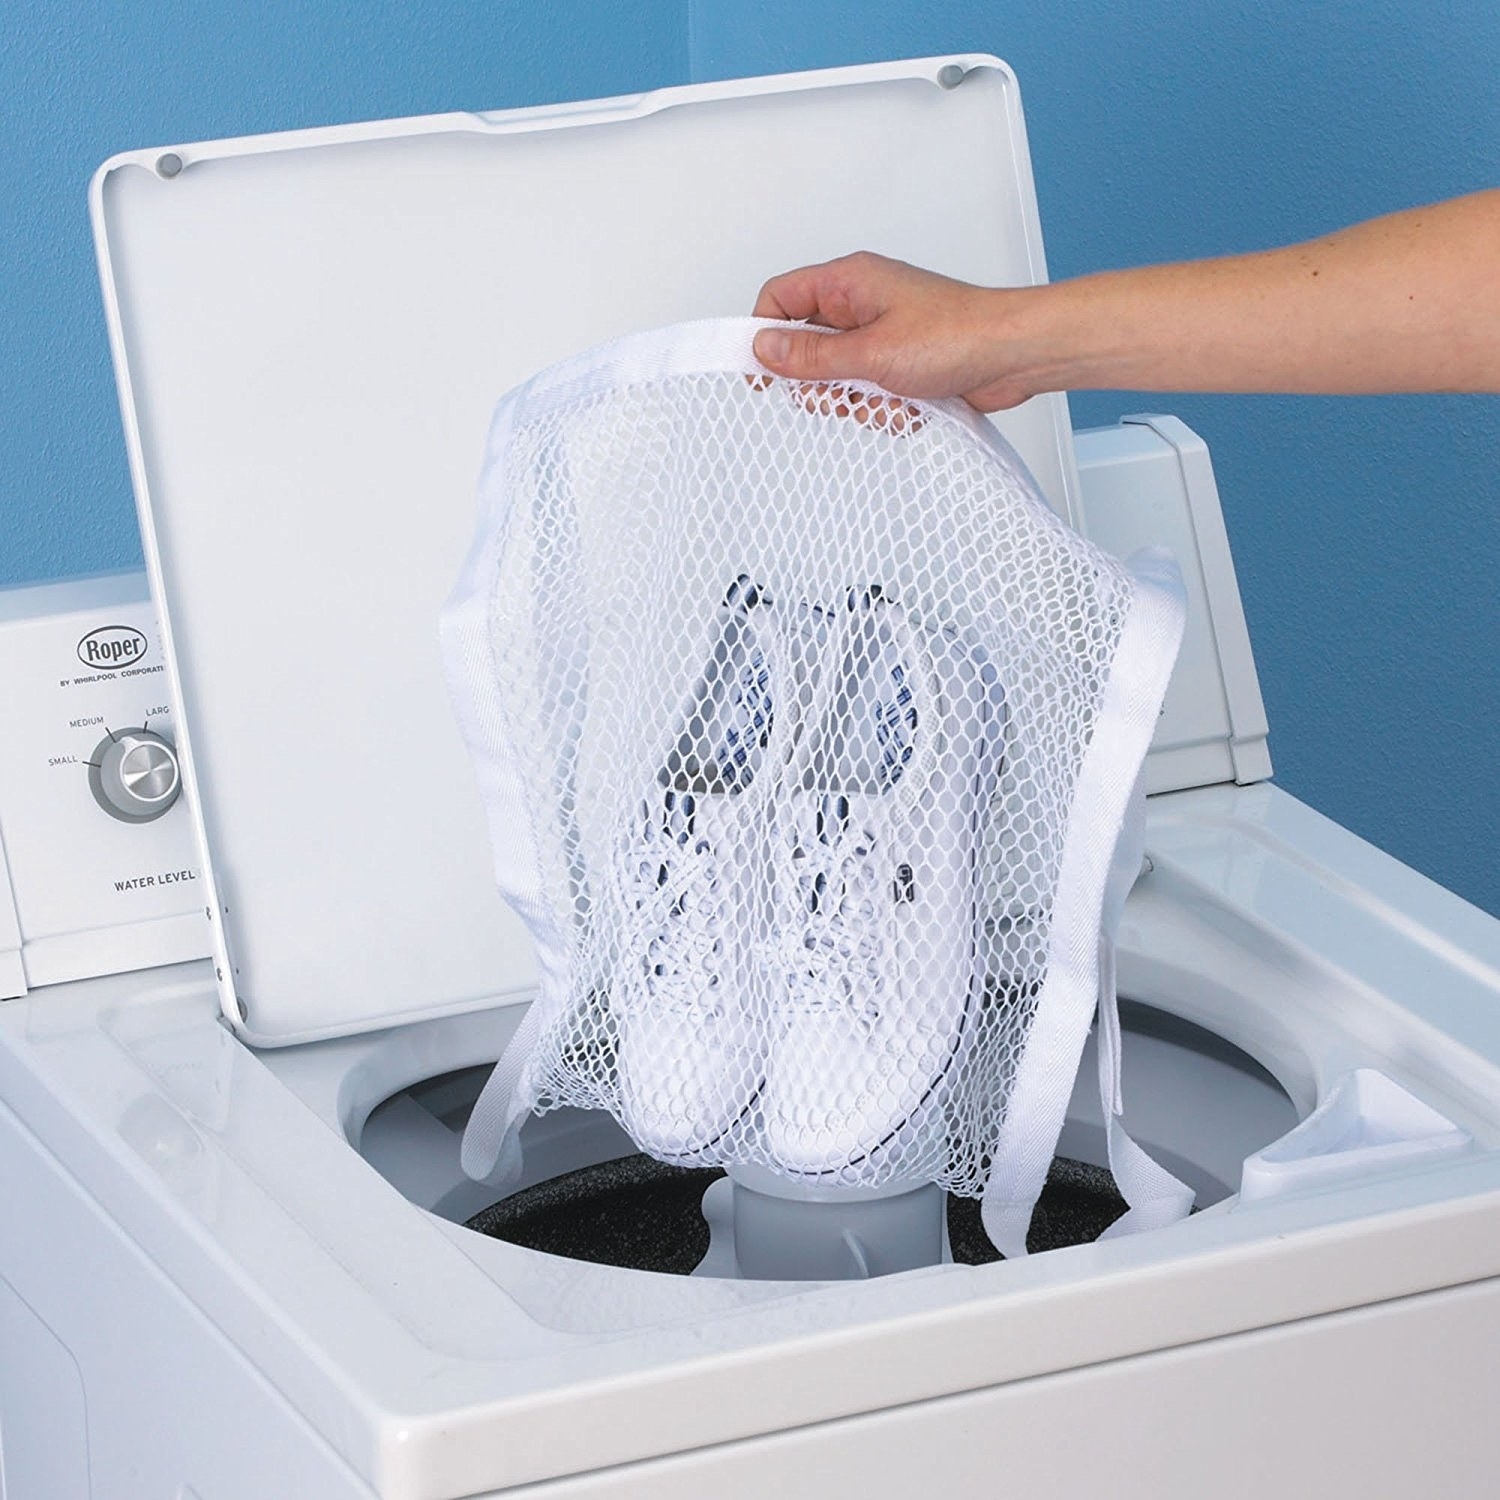 Details about   Laundry Bag For Washing Machine Bra Socks Lingerie Bag Washing Best K3C2 